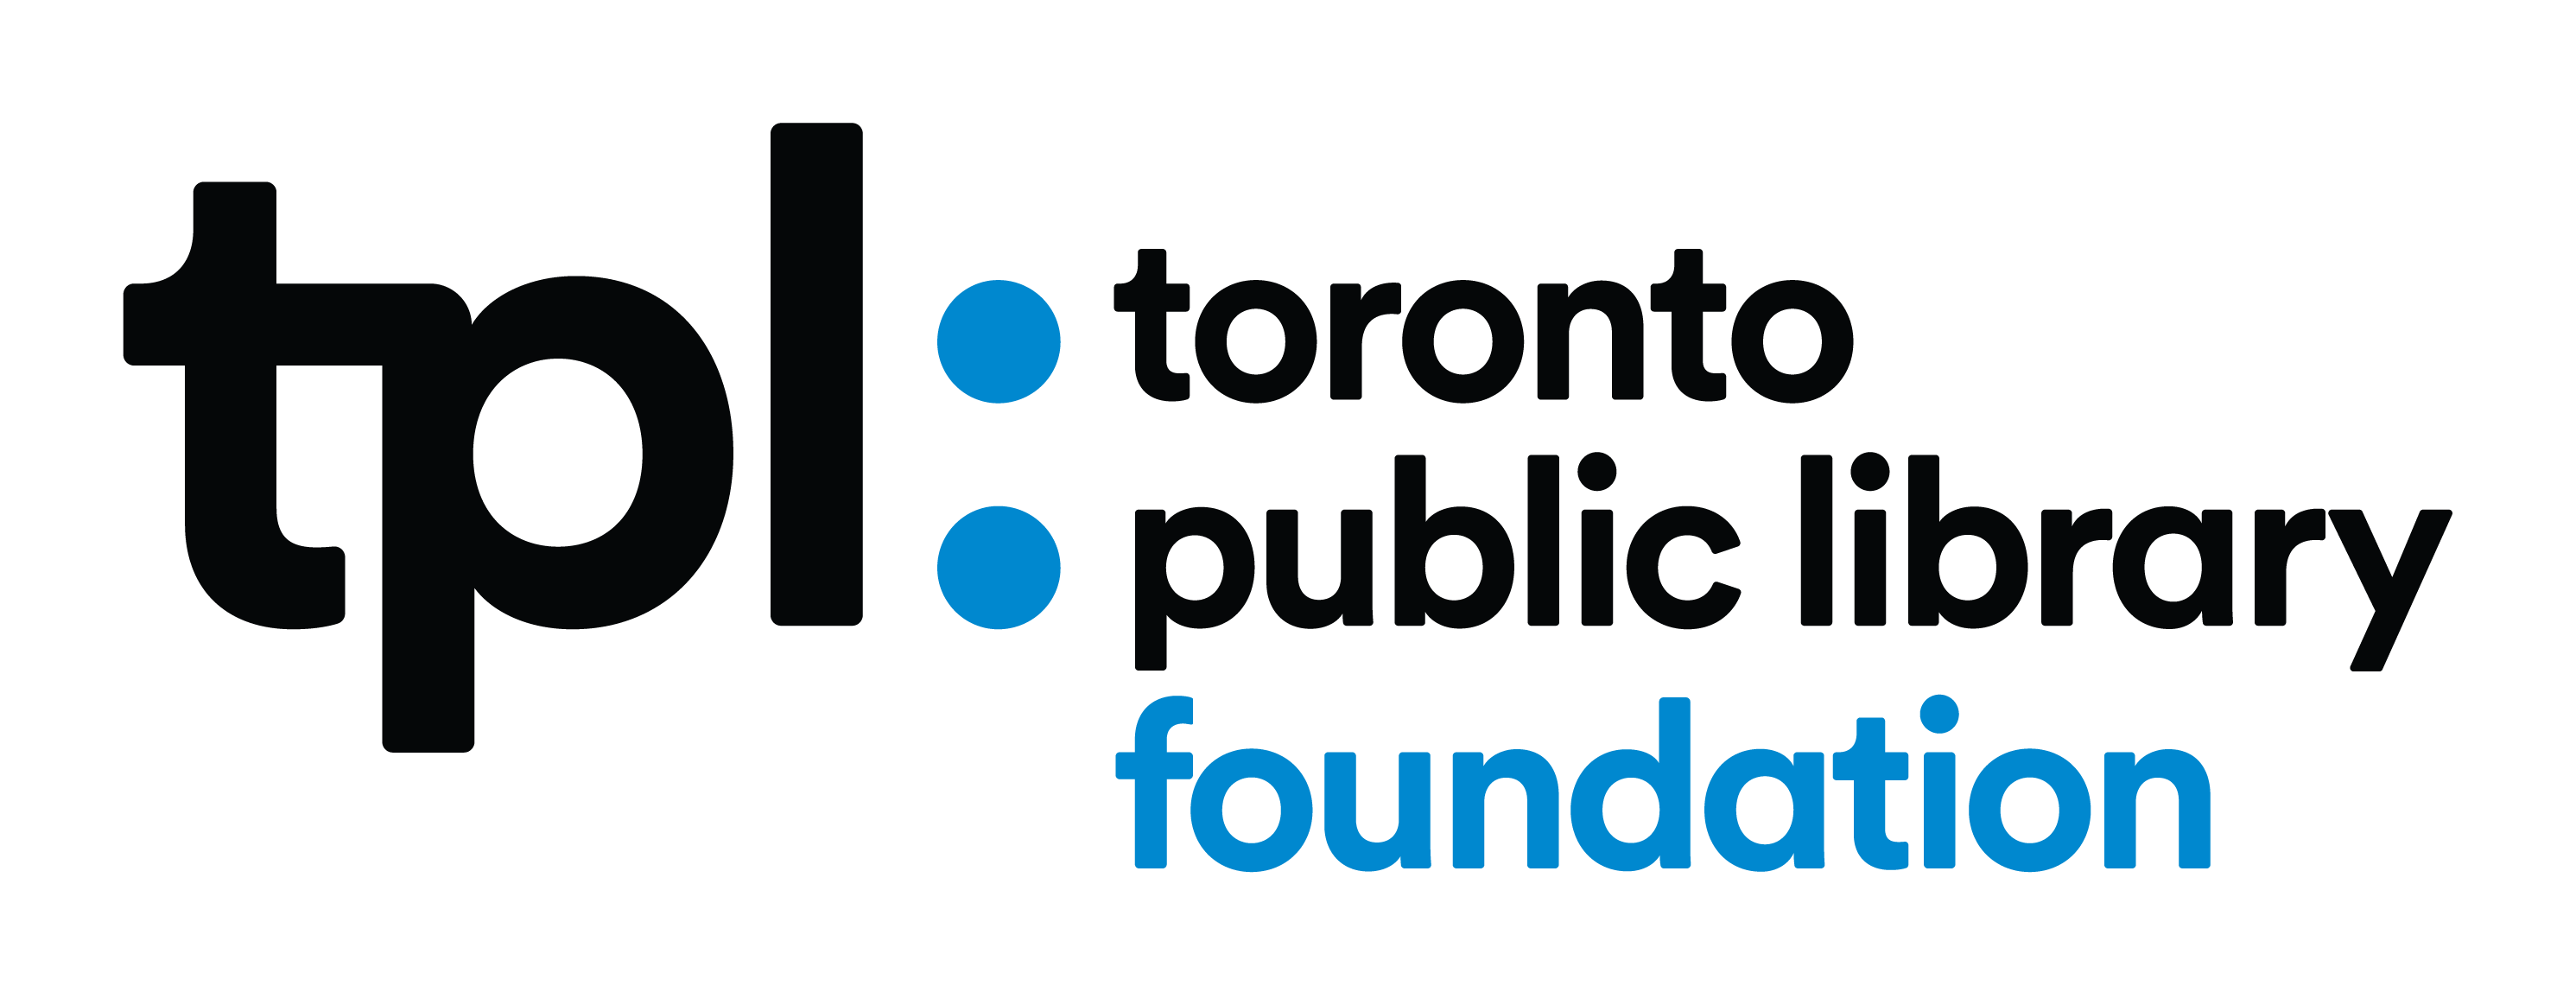 Toronto Public Library Foundation logo